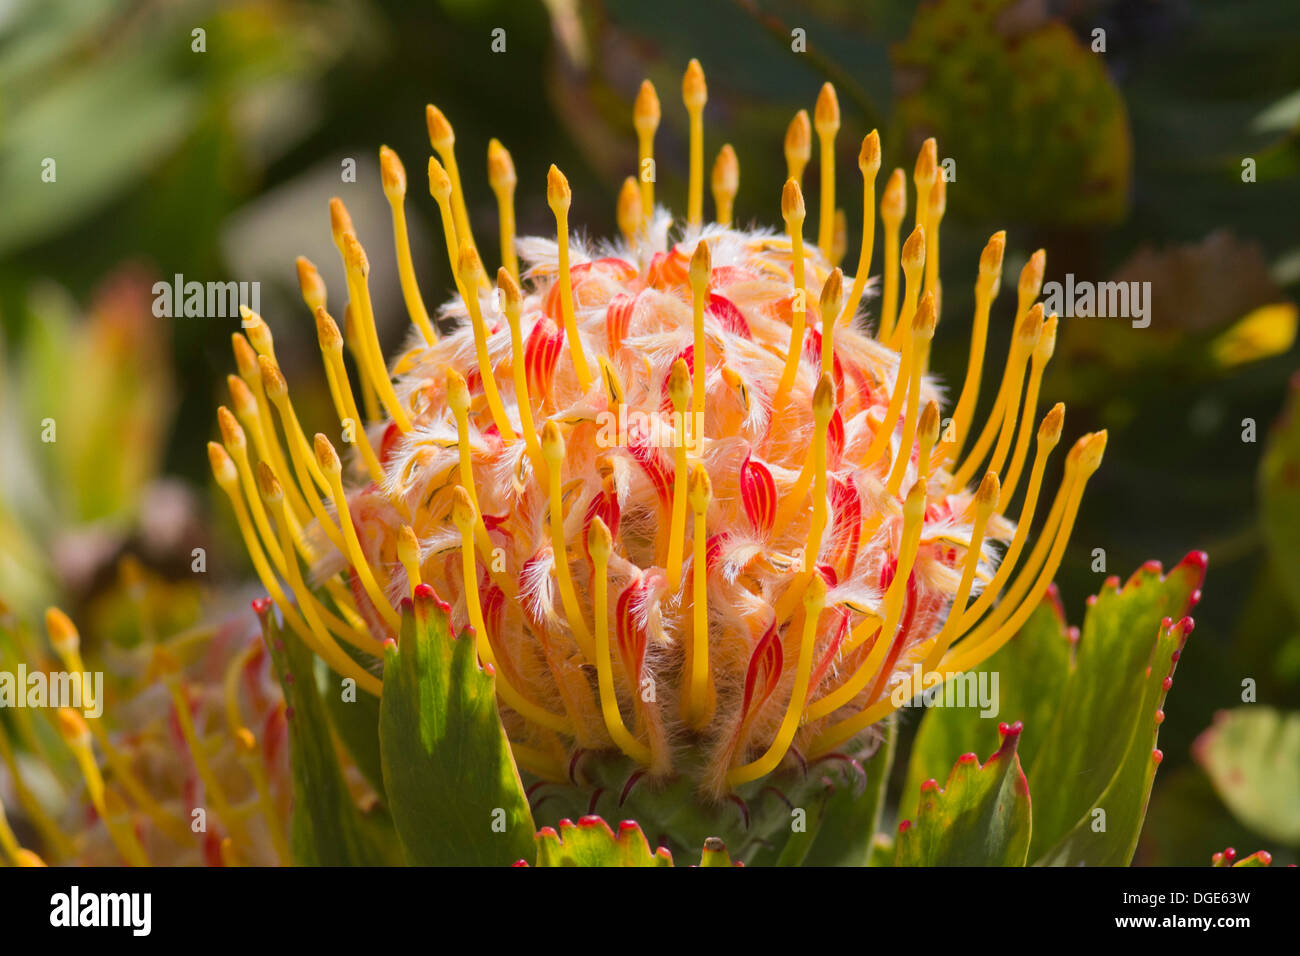 protea pflanze -fotos und -bildmaterial in hoher auflösung – alamy